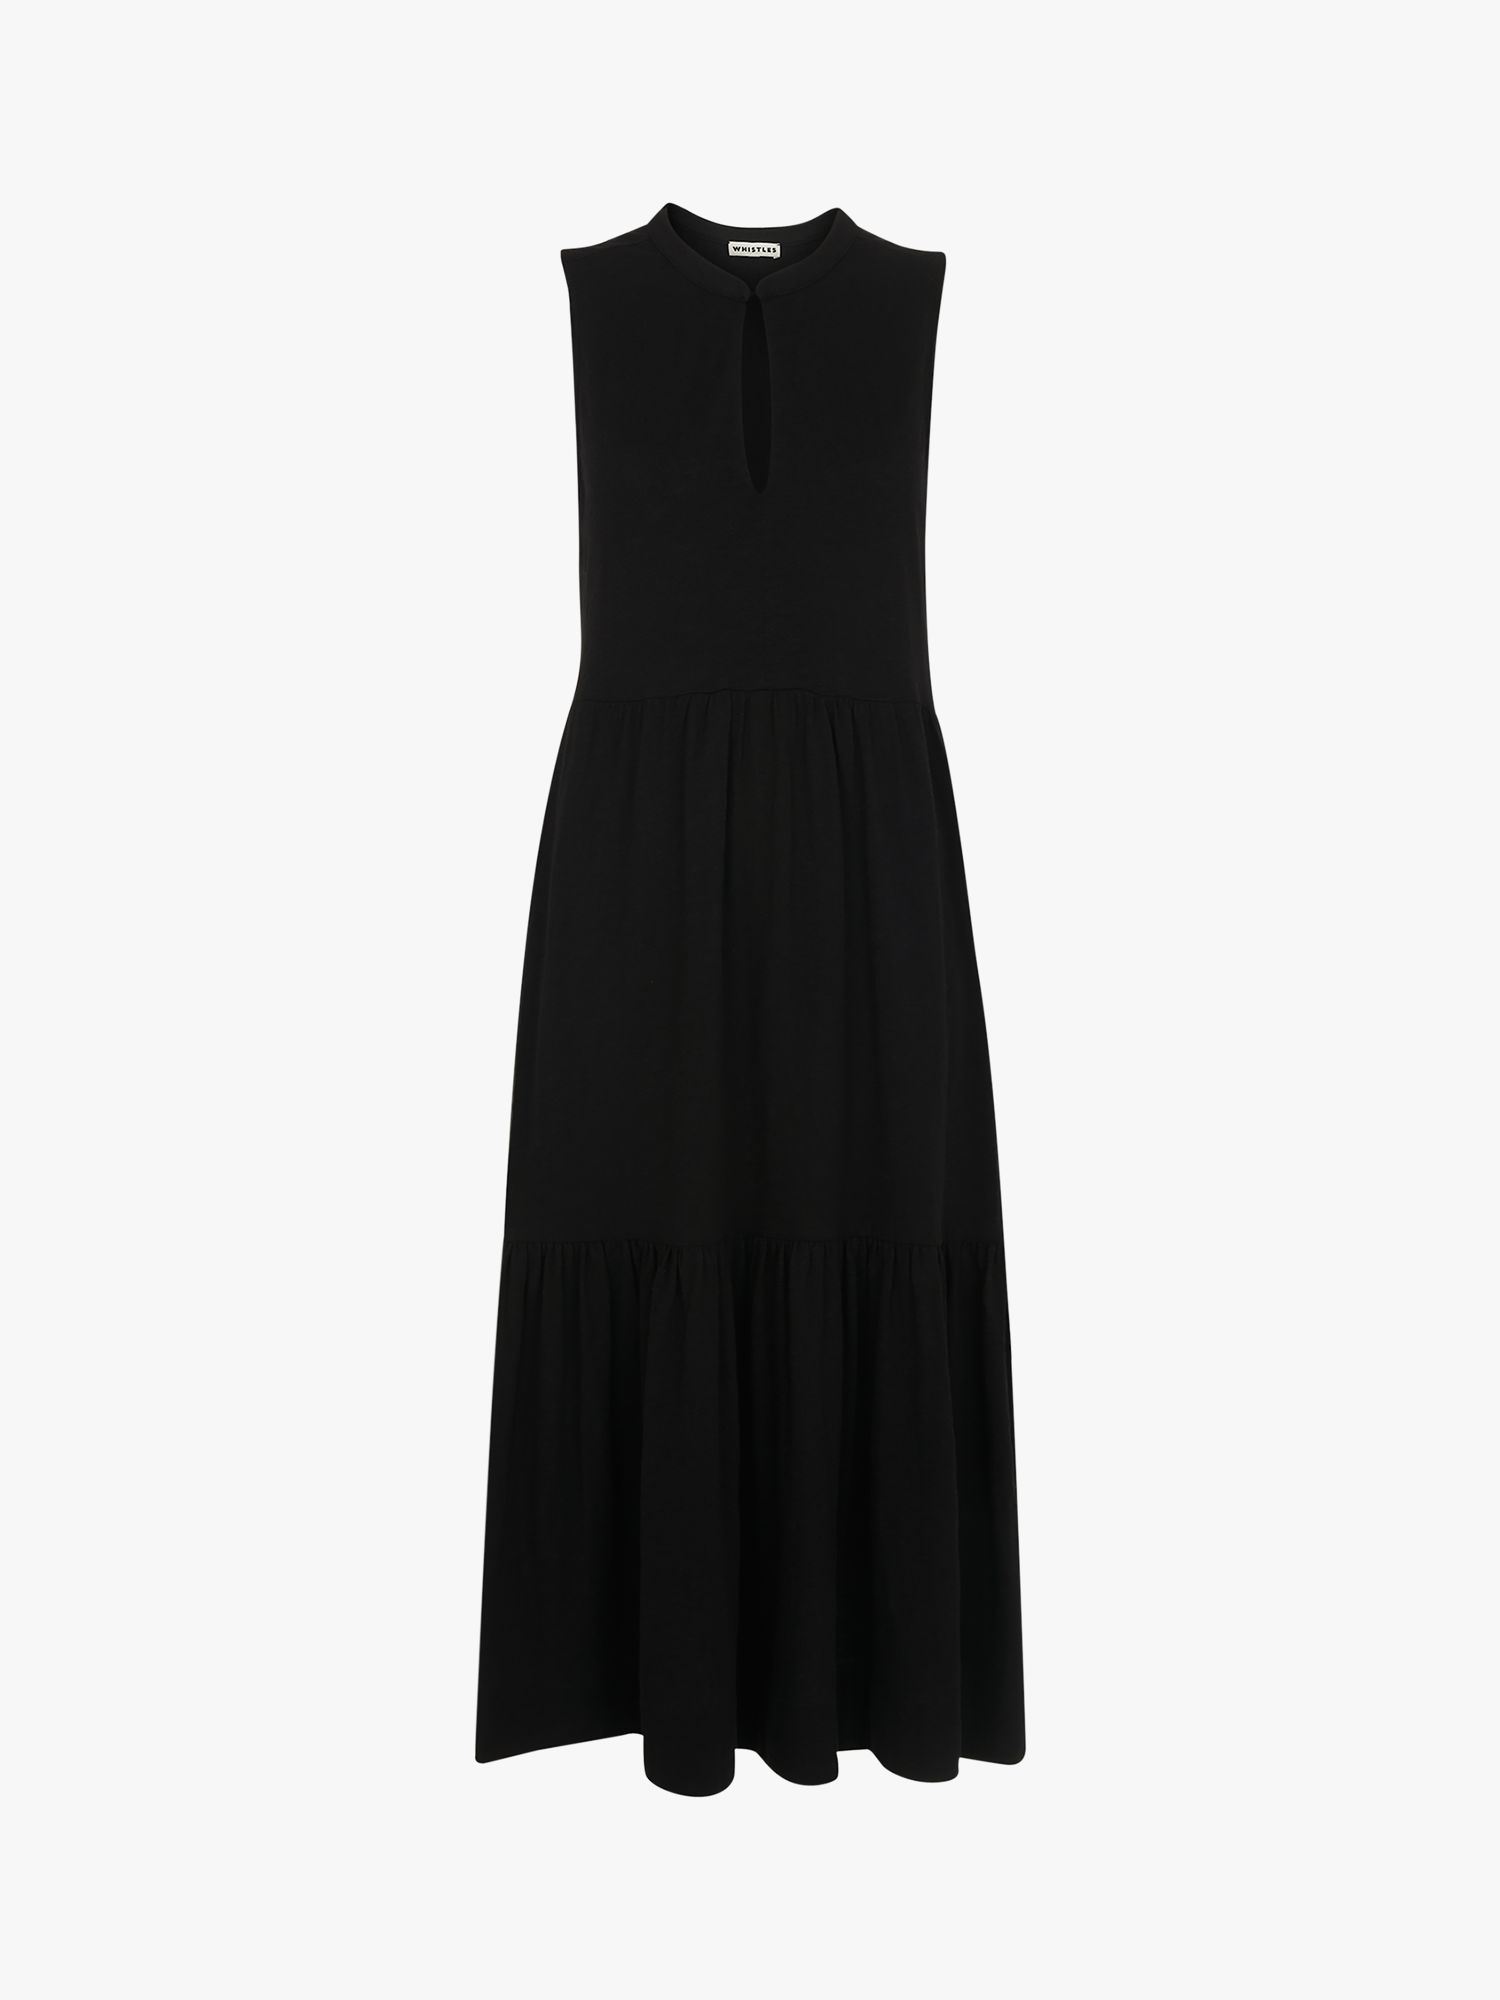 Whistles Tiered Midi Dress, Black at John Lewis & Partners